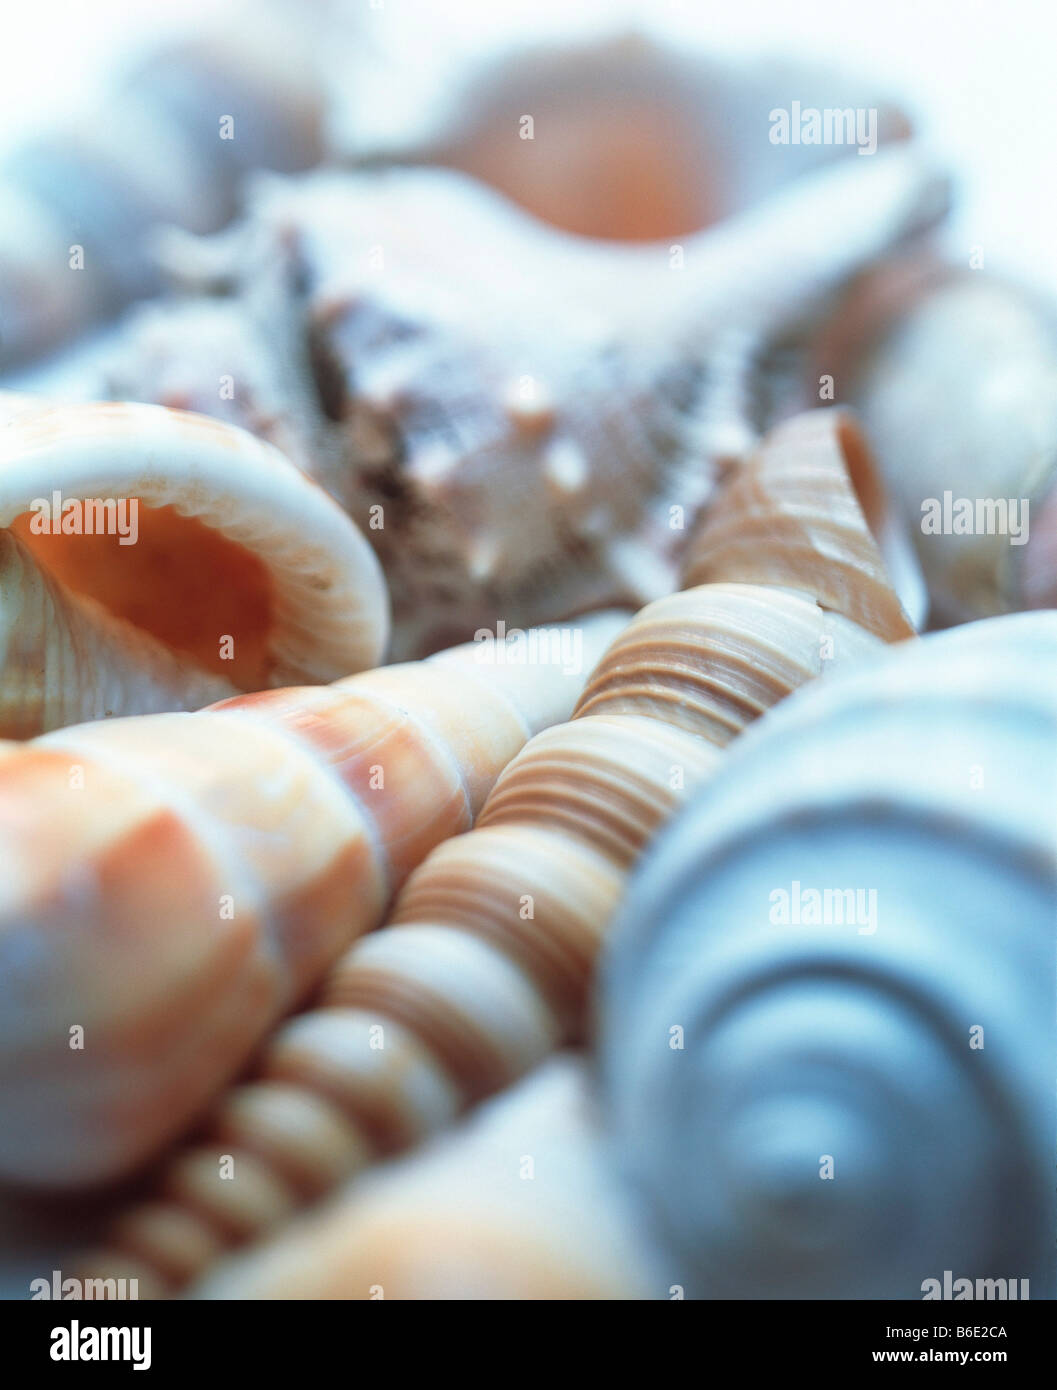 Shells of unidentified sea snails. Stock Photo